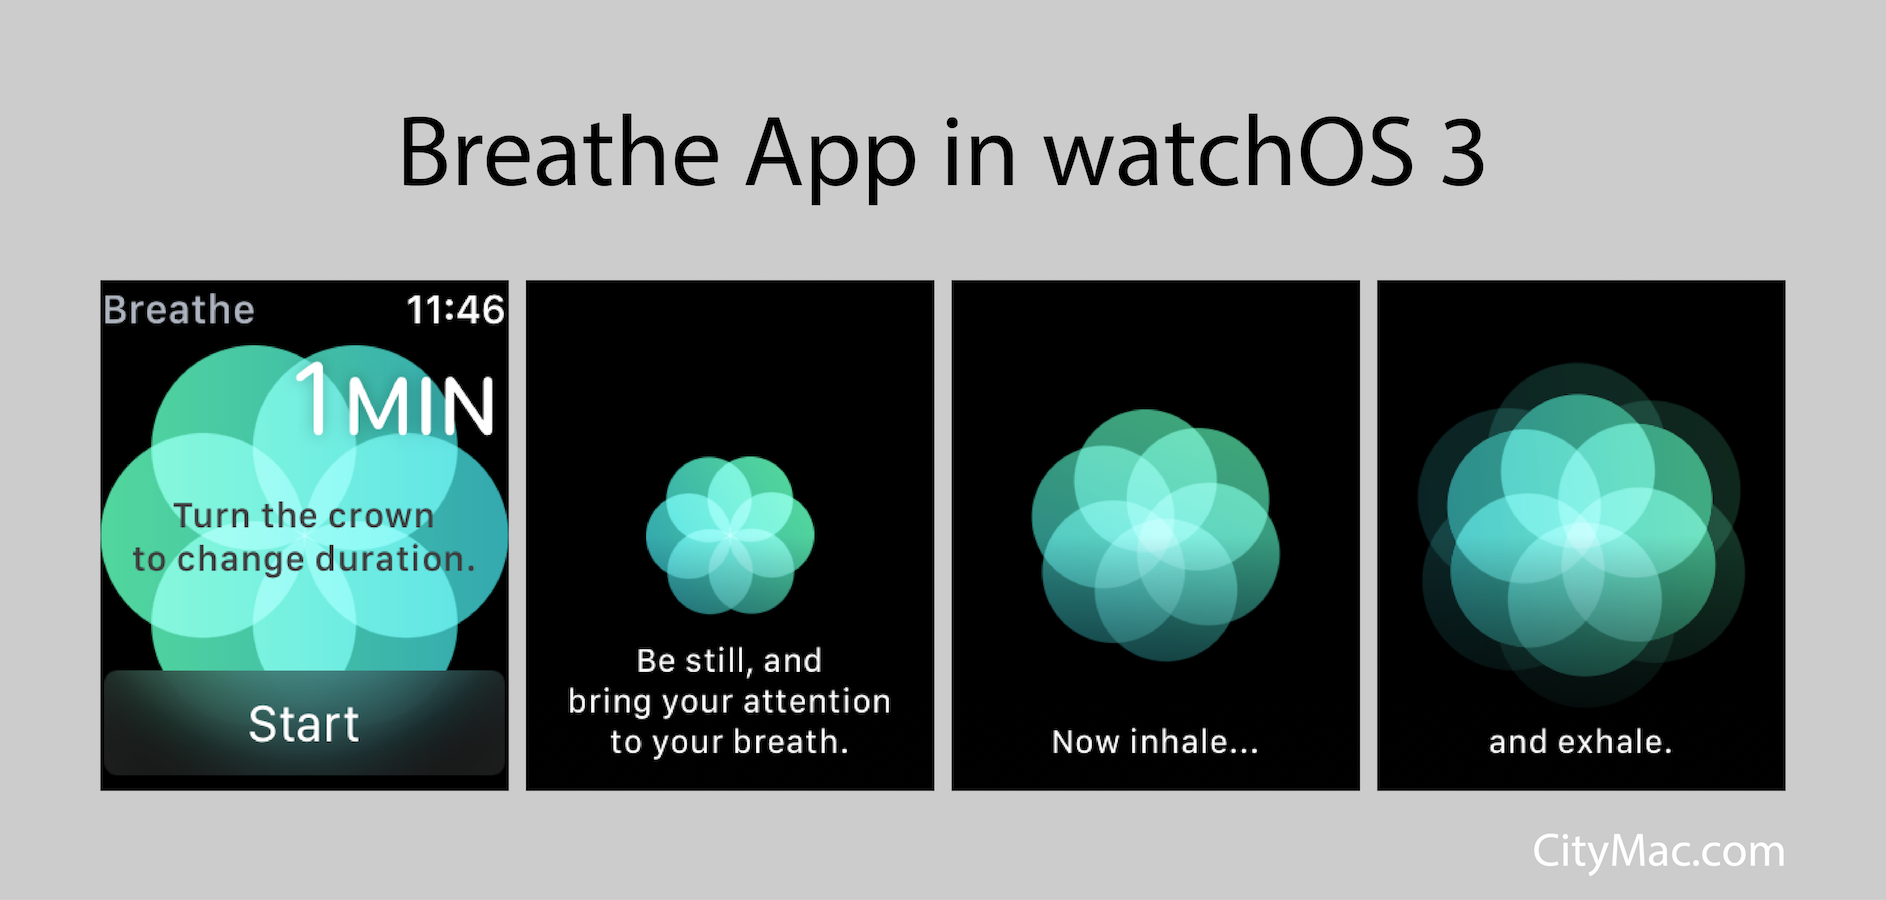 Breathe App in watchOS 3 Banner Image